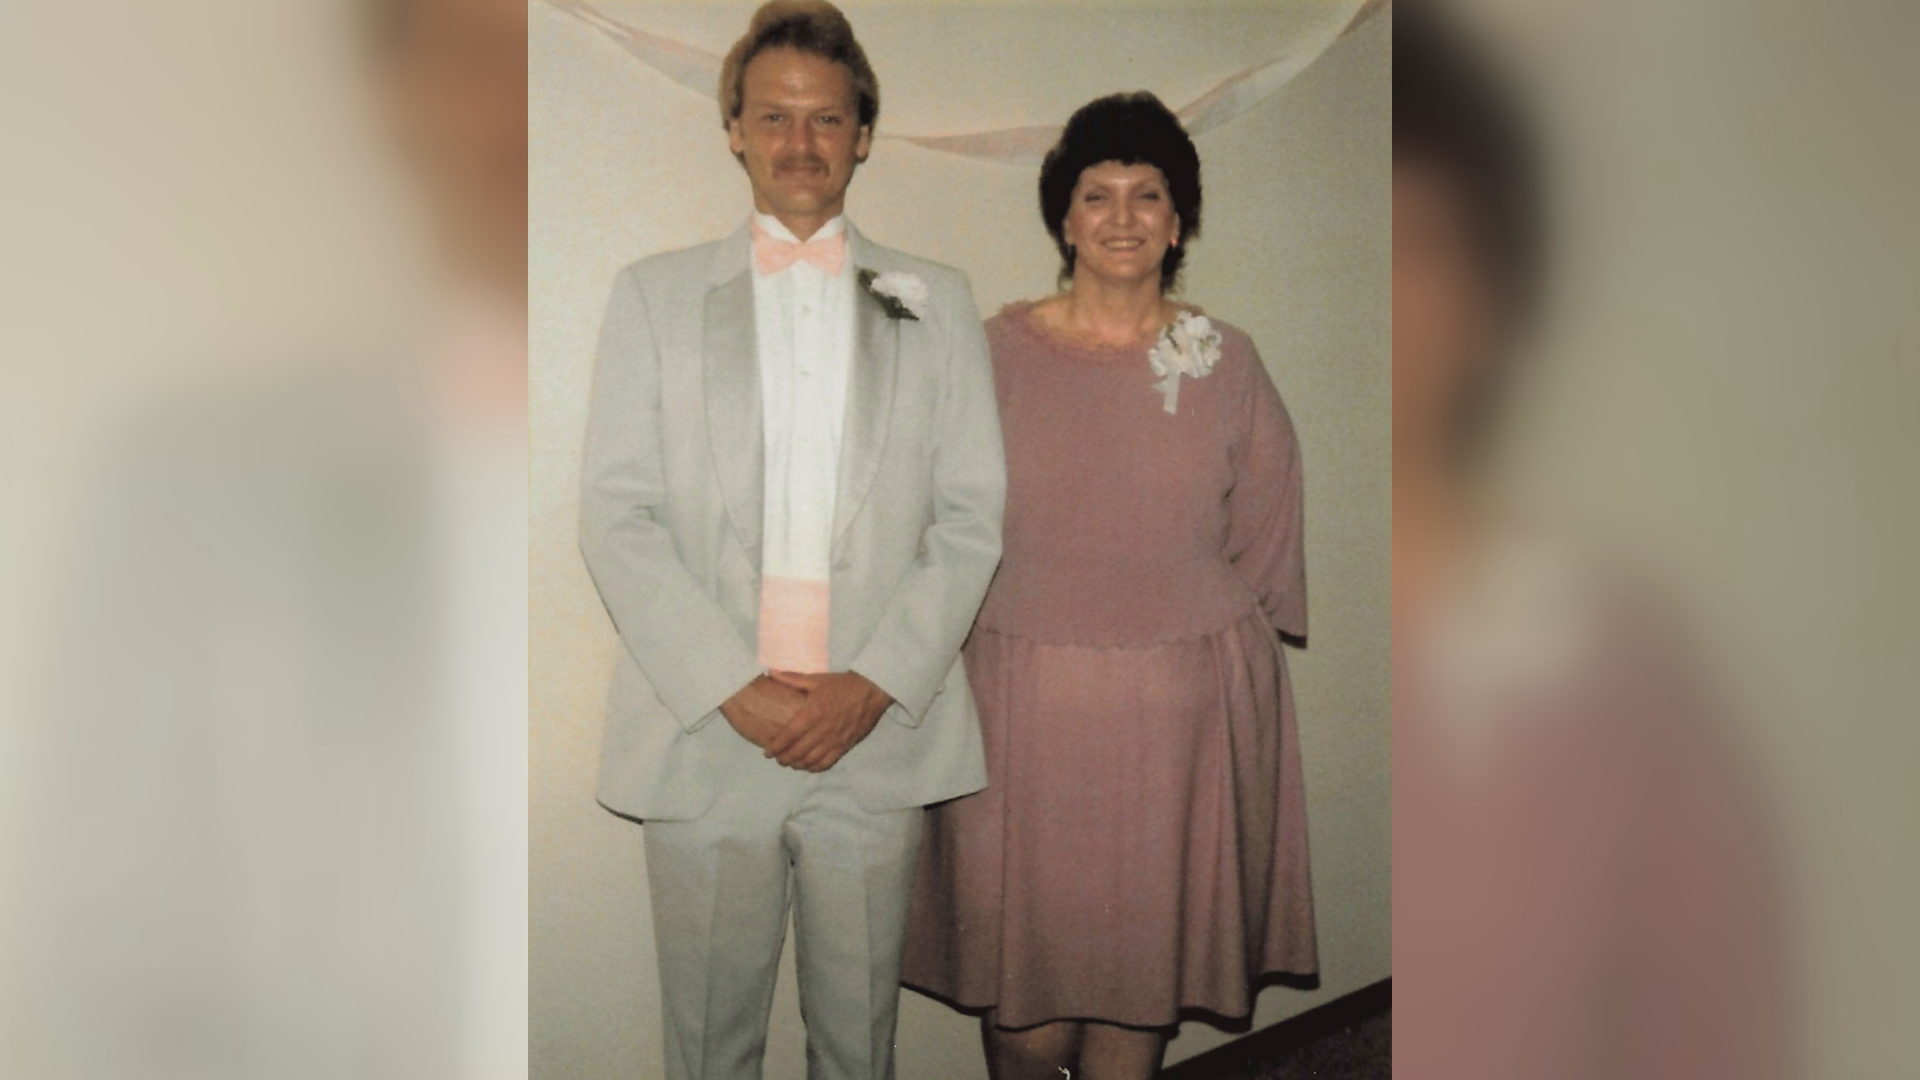 Obituary: Pickens, Bryan Lee